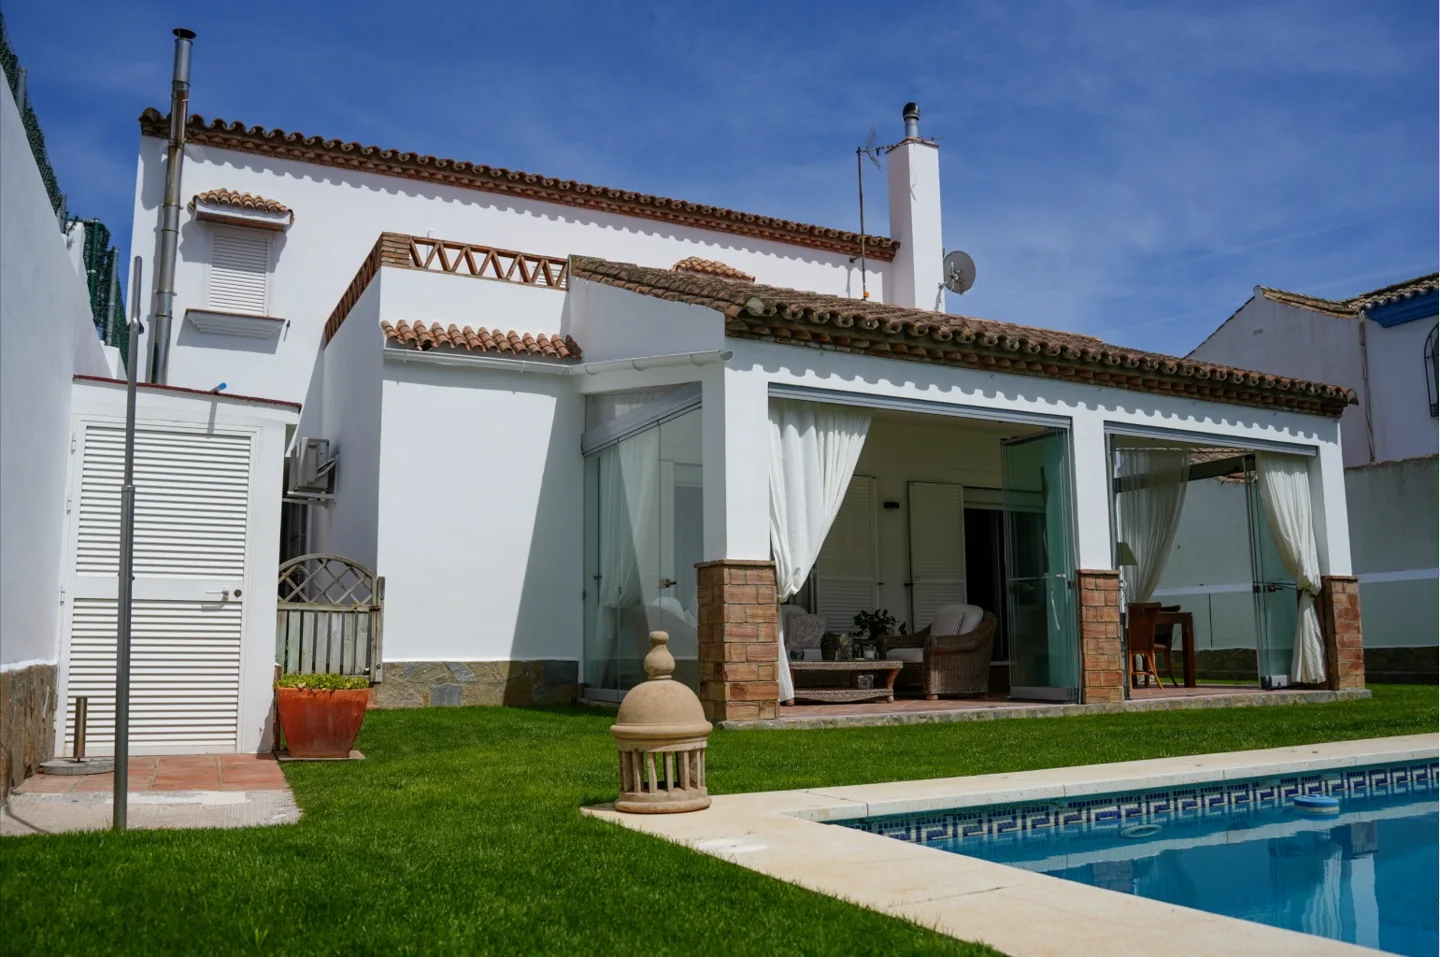 Villa de estilo andaluz para alquiler